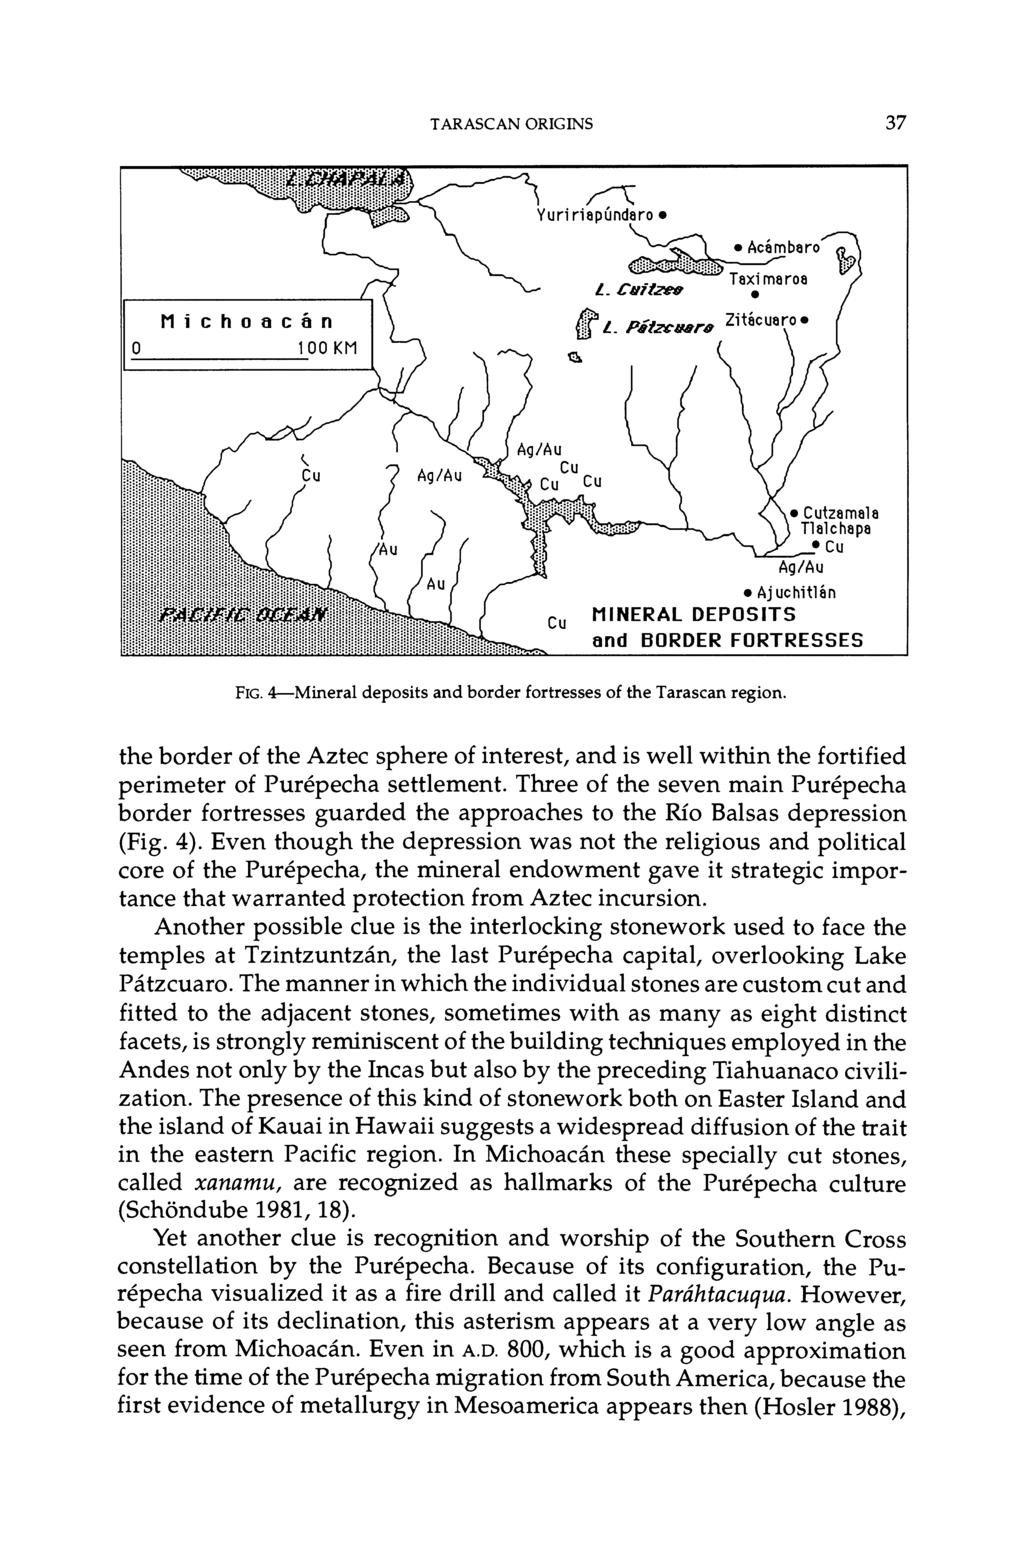 TARASCAN ORIGINS 37 pitr \ <\'0* Cutzamala 's"':.:'" ") Tlalchapa - Cu Ag/Au * Aj uchitlan MINERAL DEPOSITS and BORDER FORTRESSES FIG. 4-Mineral deposits and border fortresses of the Tarascan region.